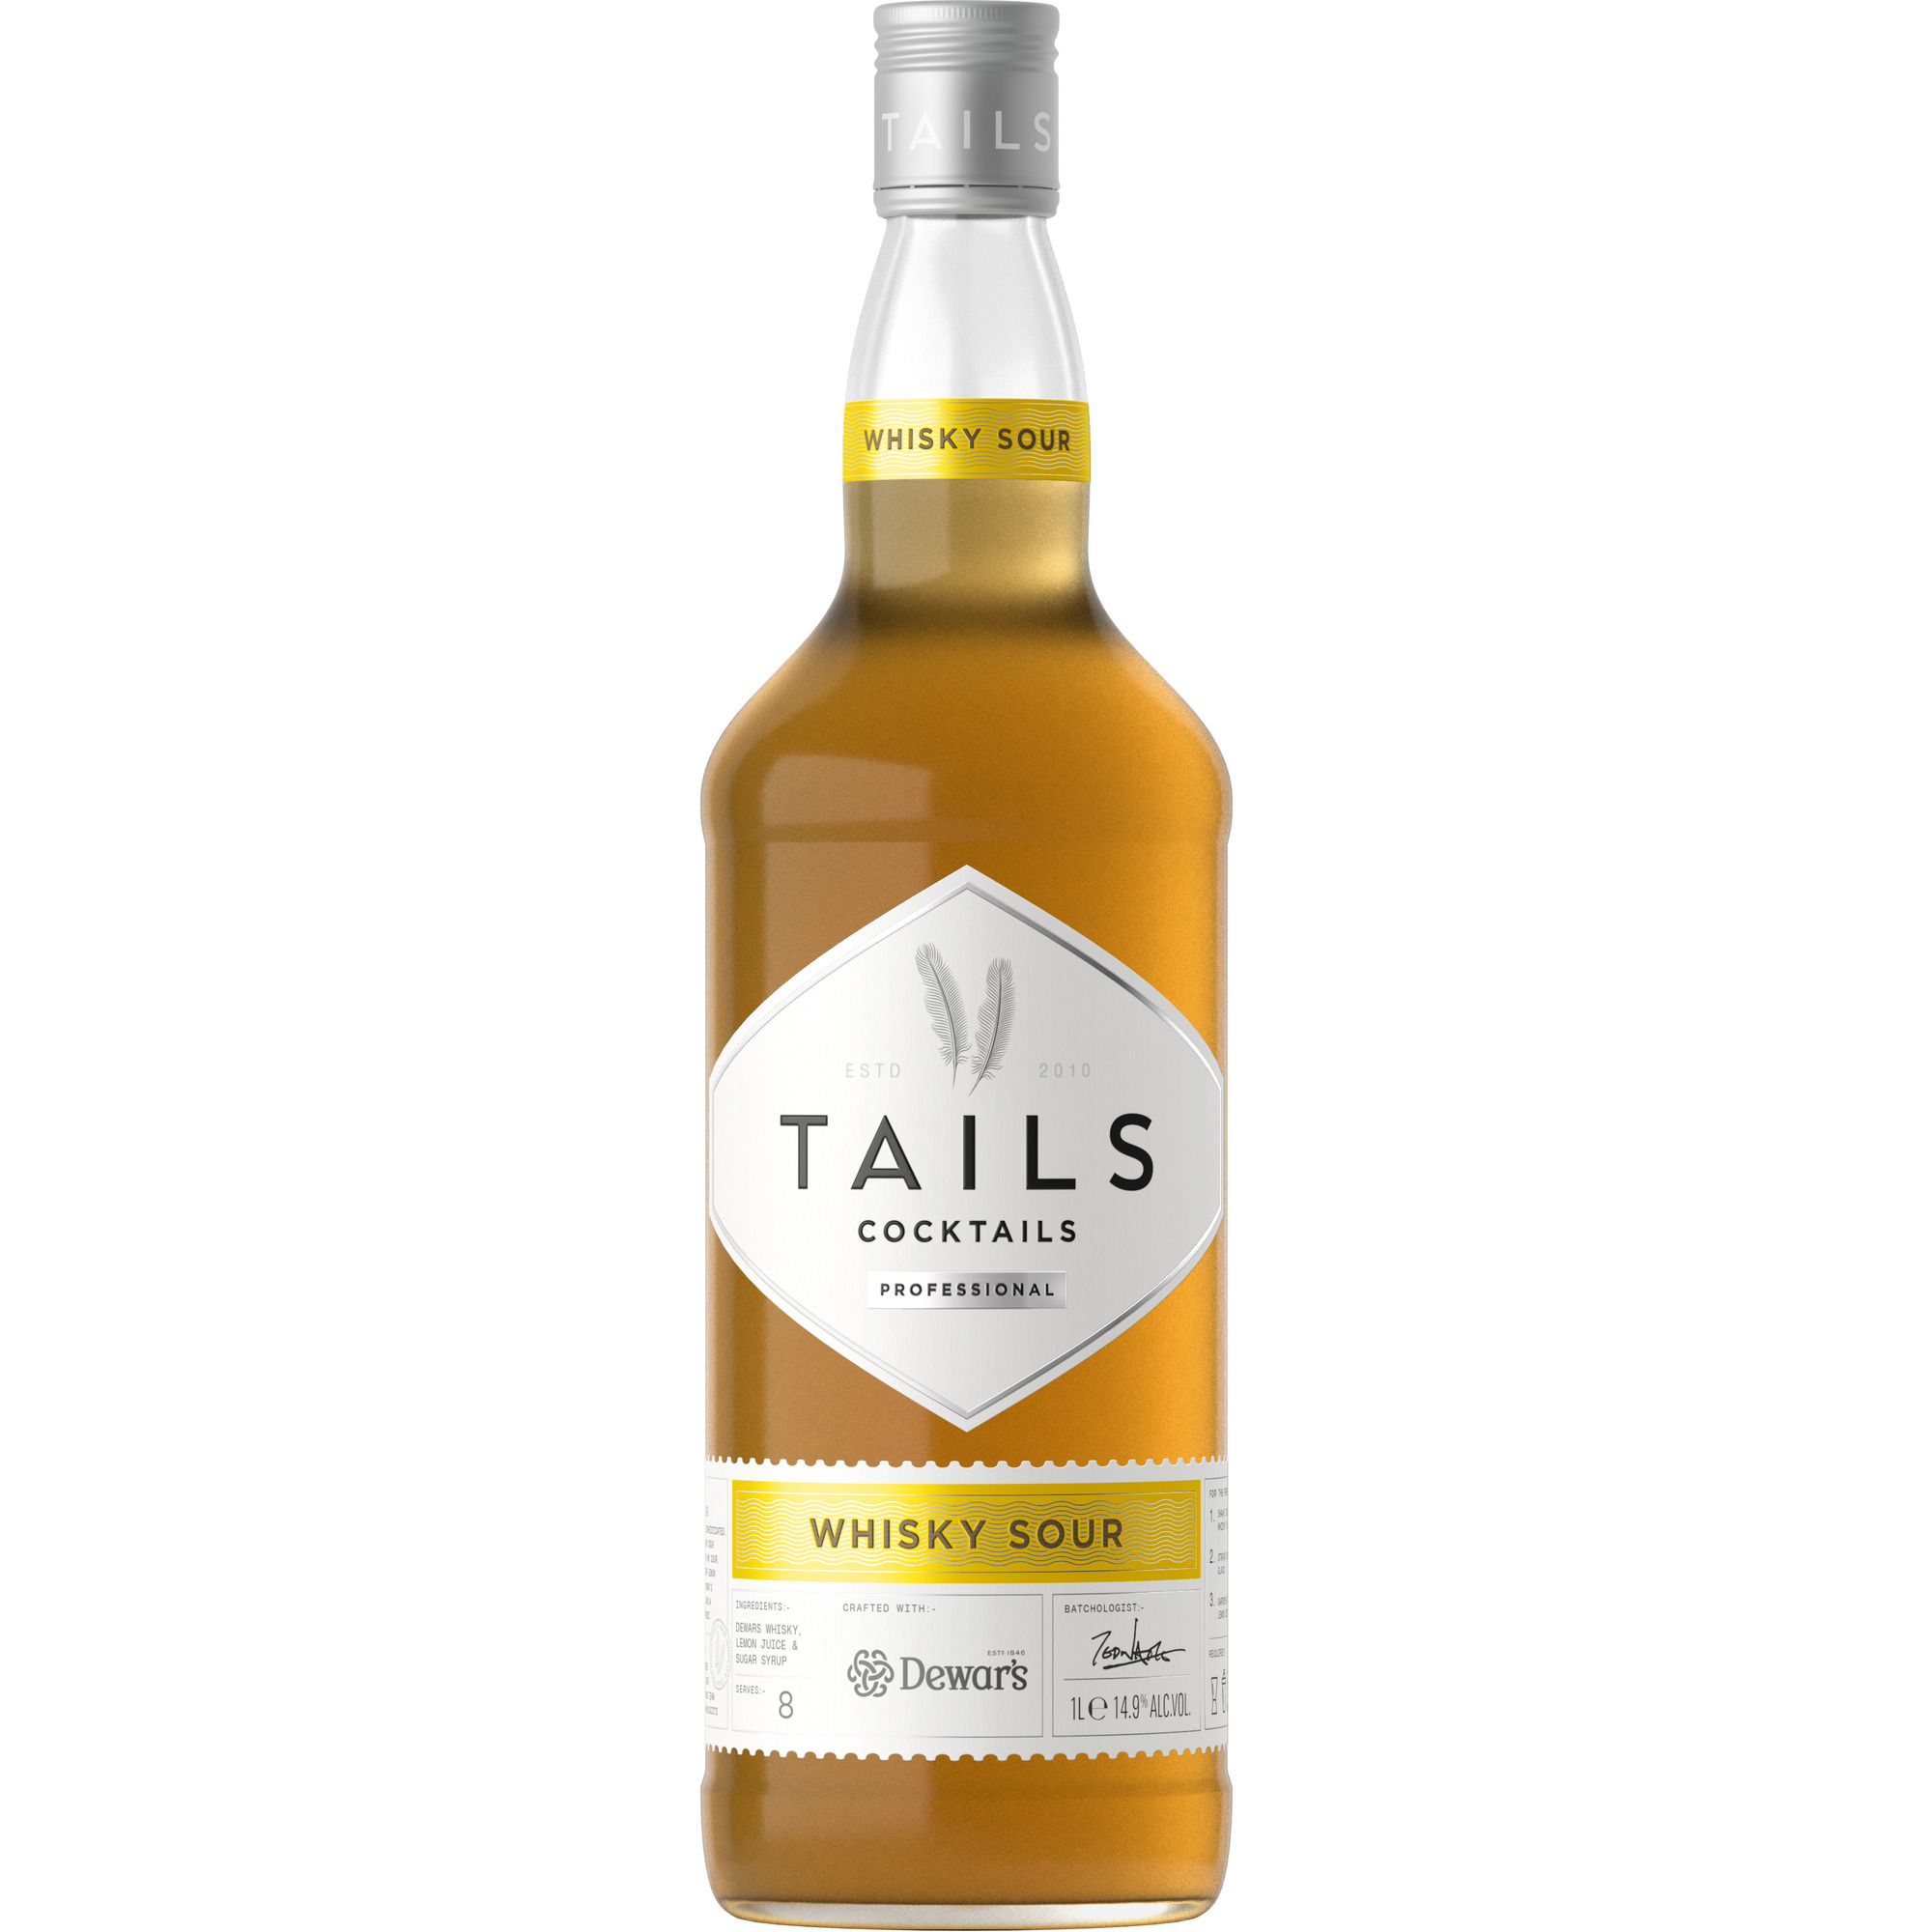 Tails 1l, Whisky Sour